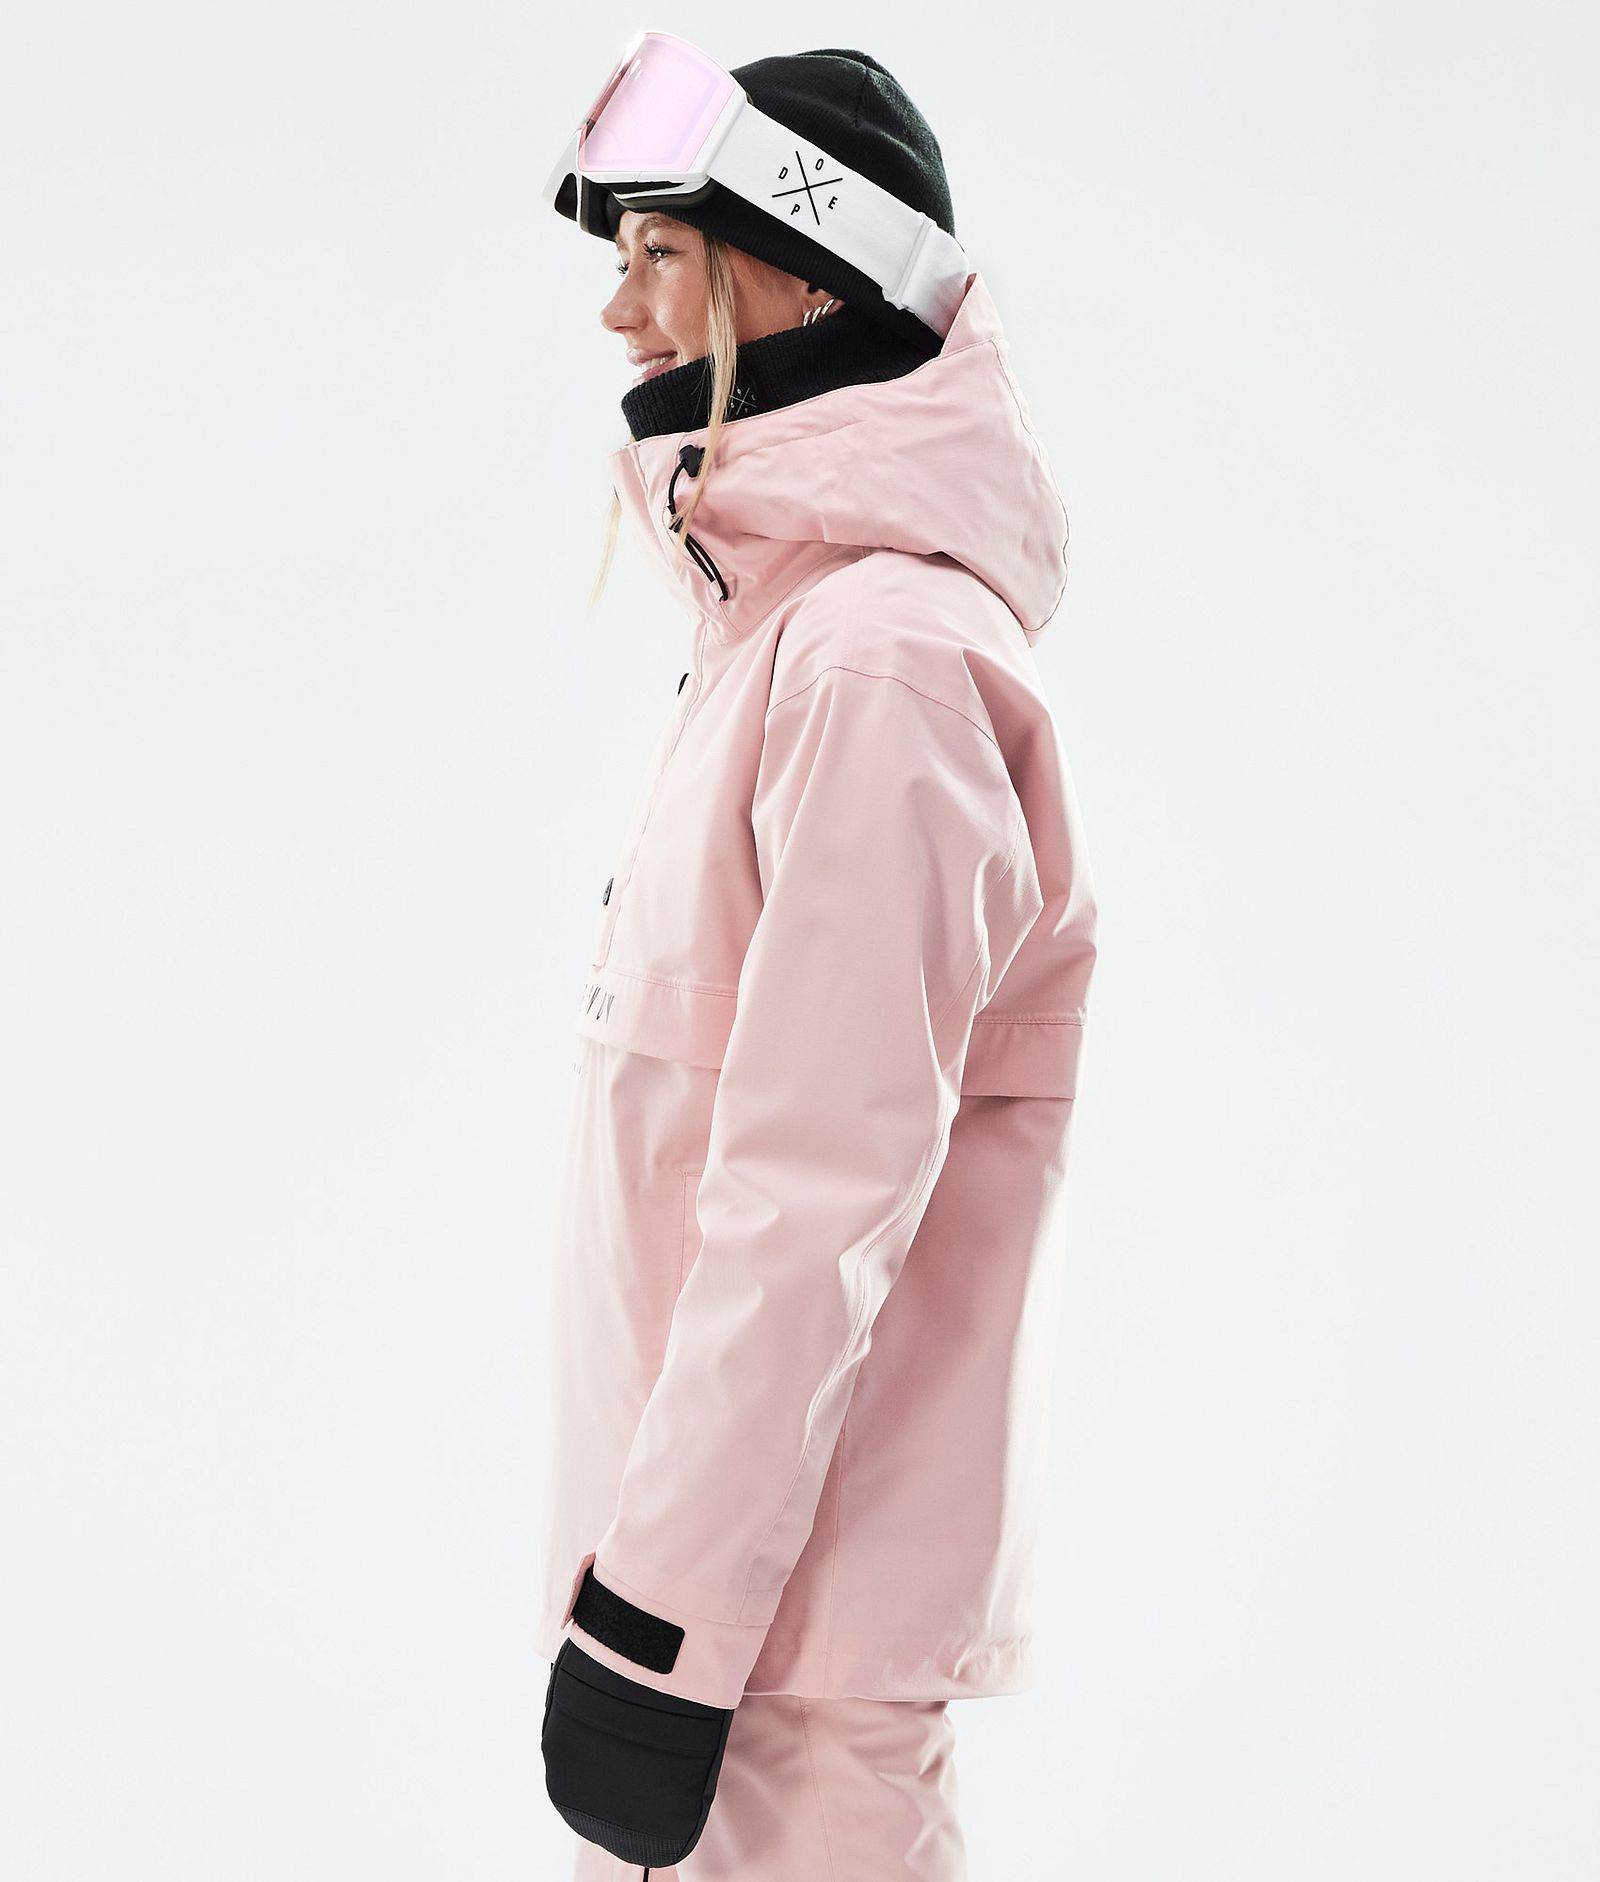 Legacy W Chaqueta Snowboard Mujer Soft Pink